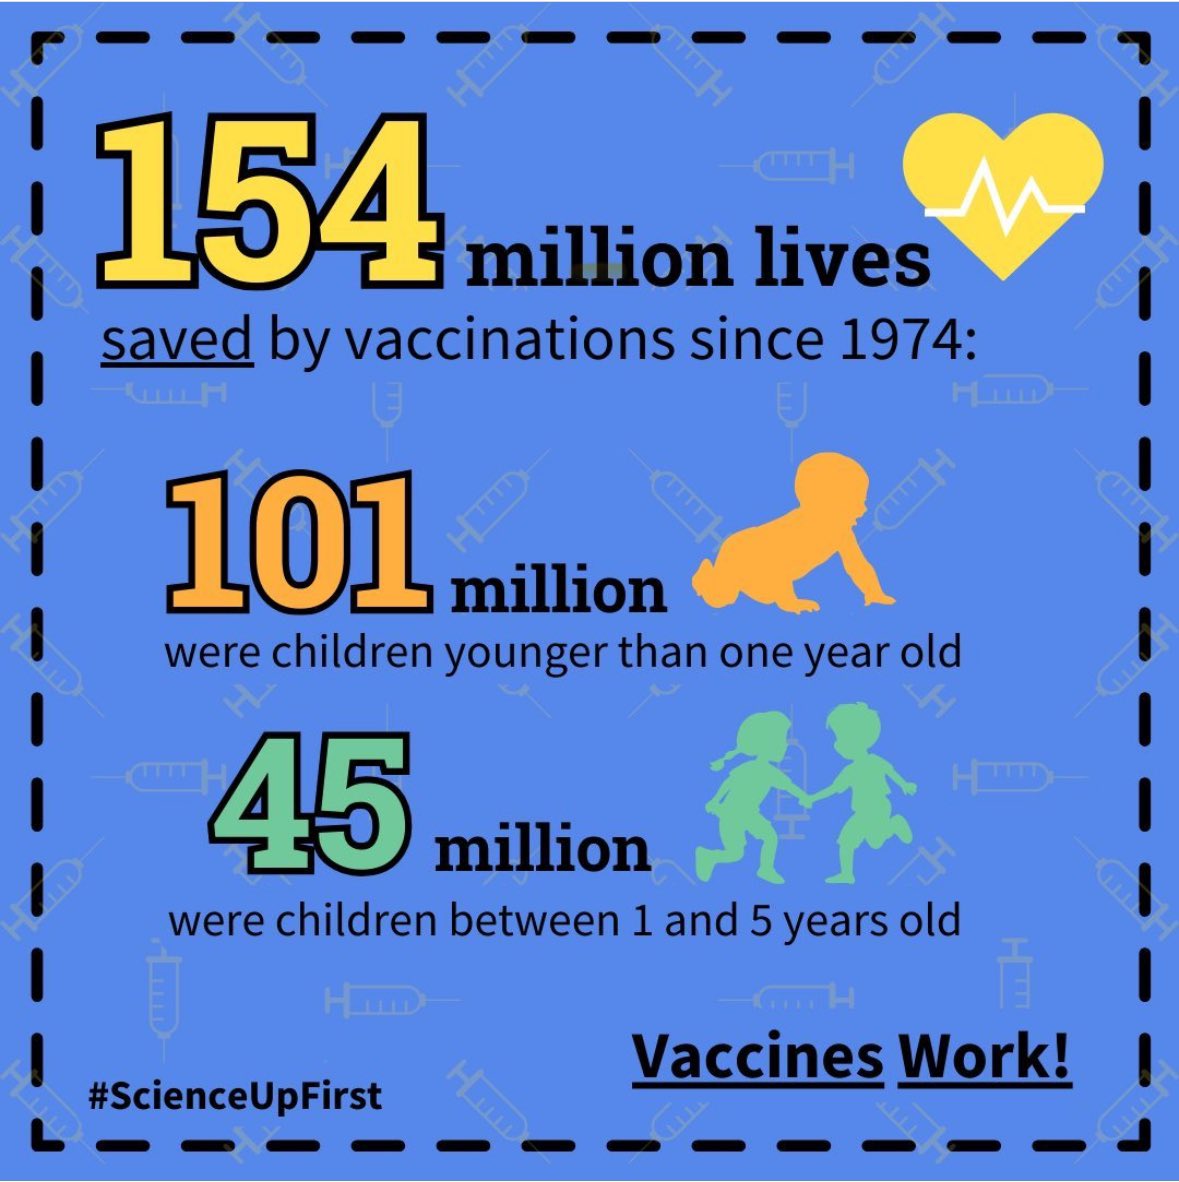 The #ScienceUpFirst reality: #VaccinesWork!